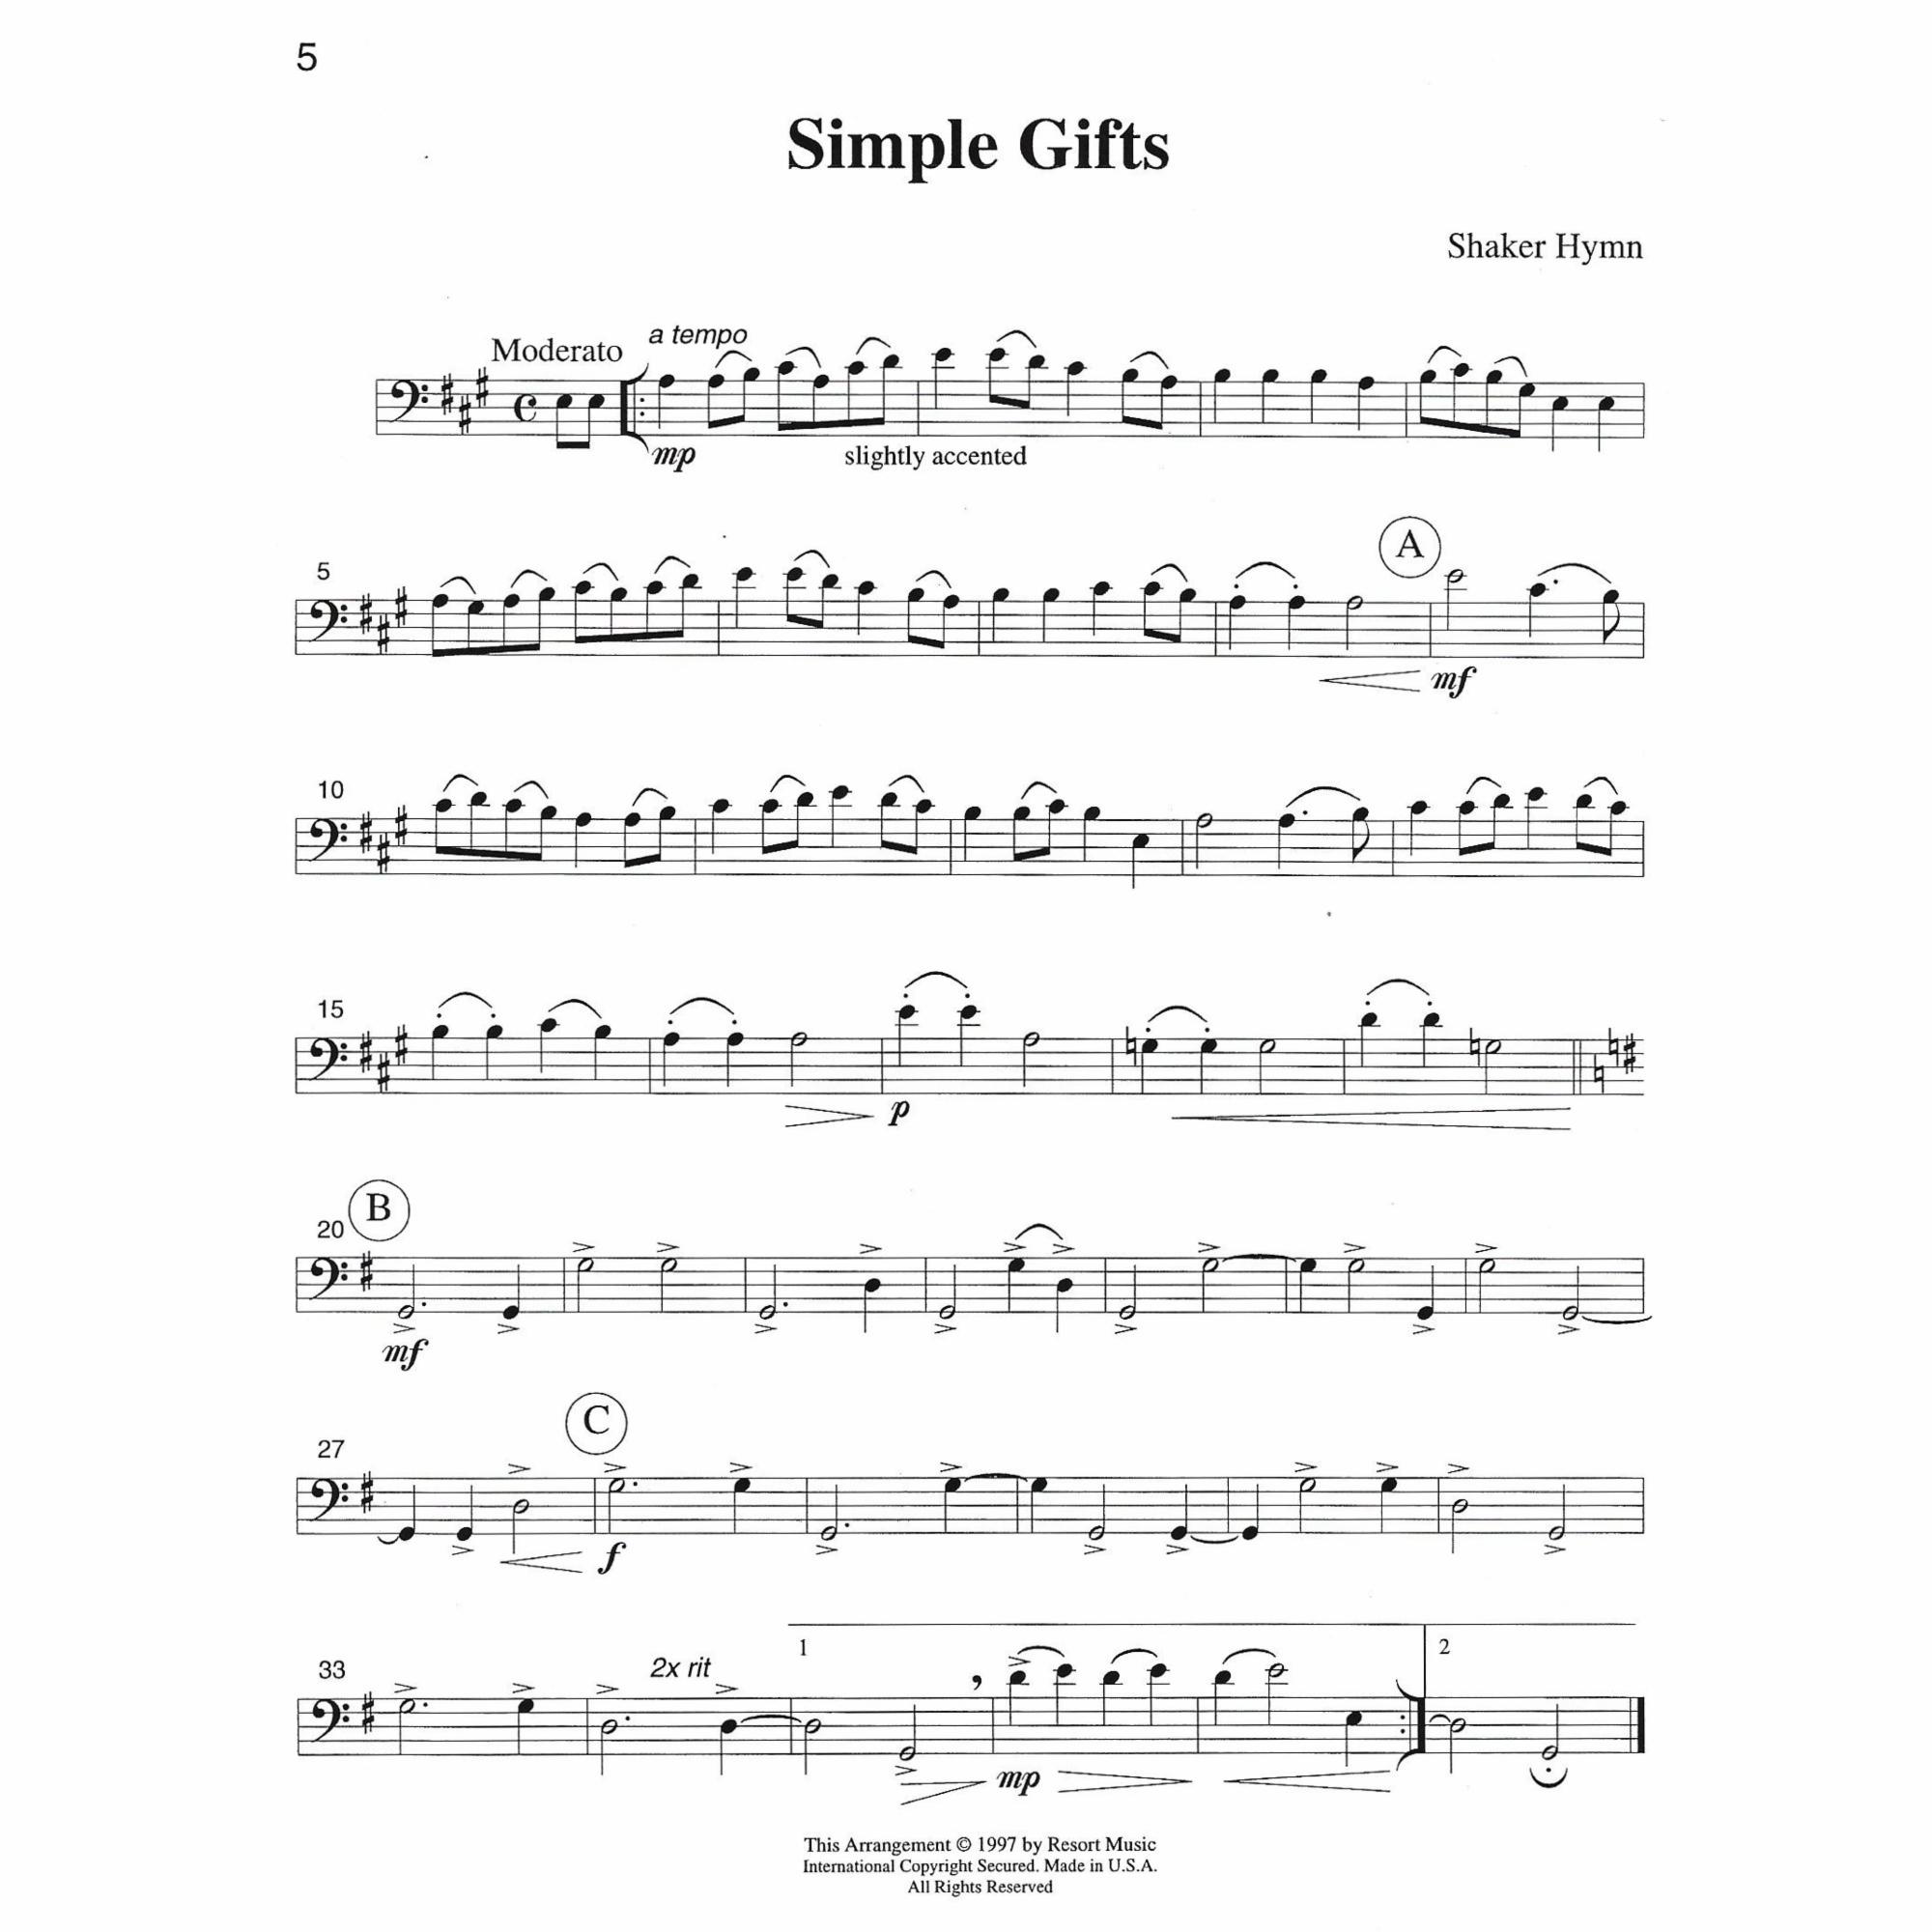 Sample: Part 3: Cello (Pg. 5)